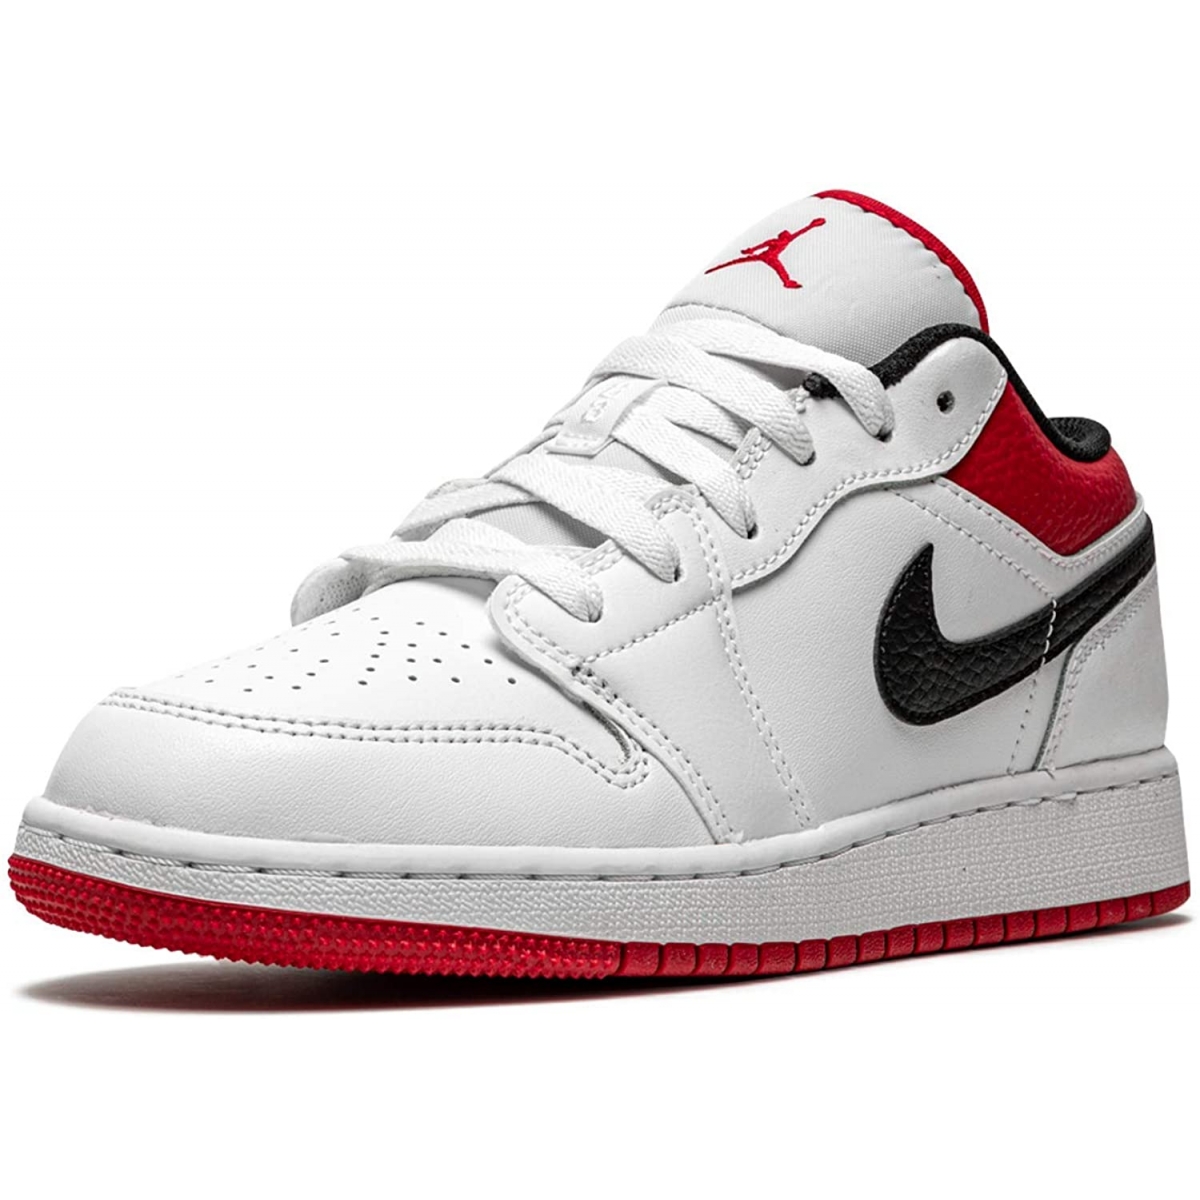 Air Jordan 1 Low Gs White And Gym Red Pk Kicks